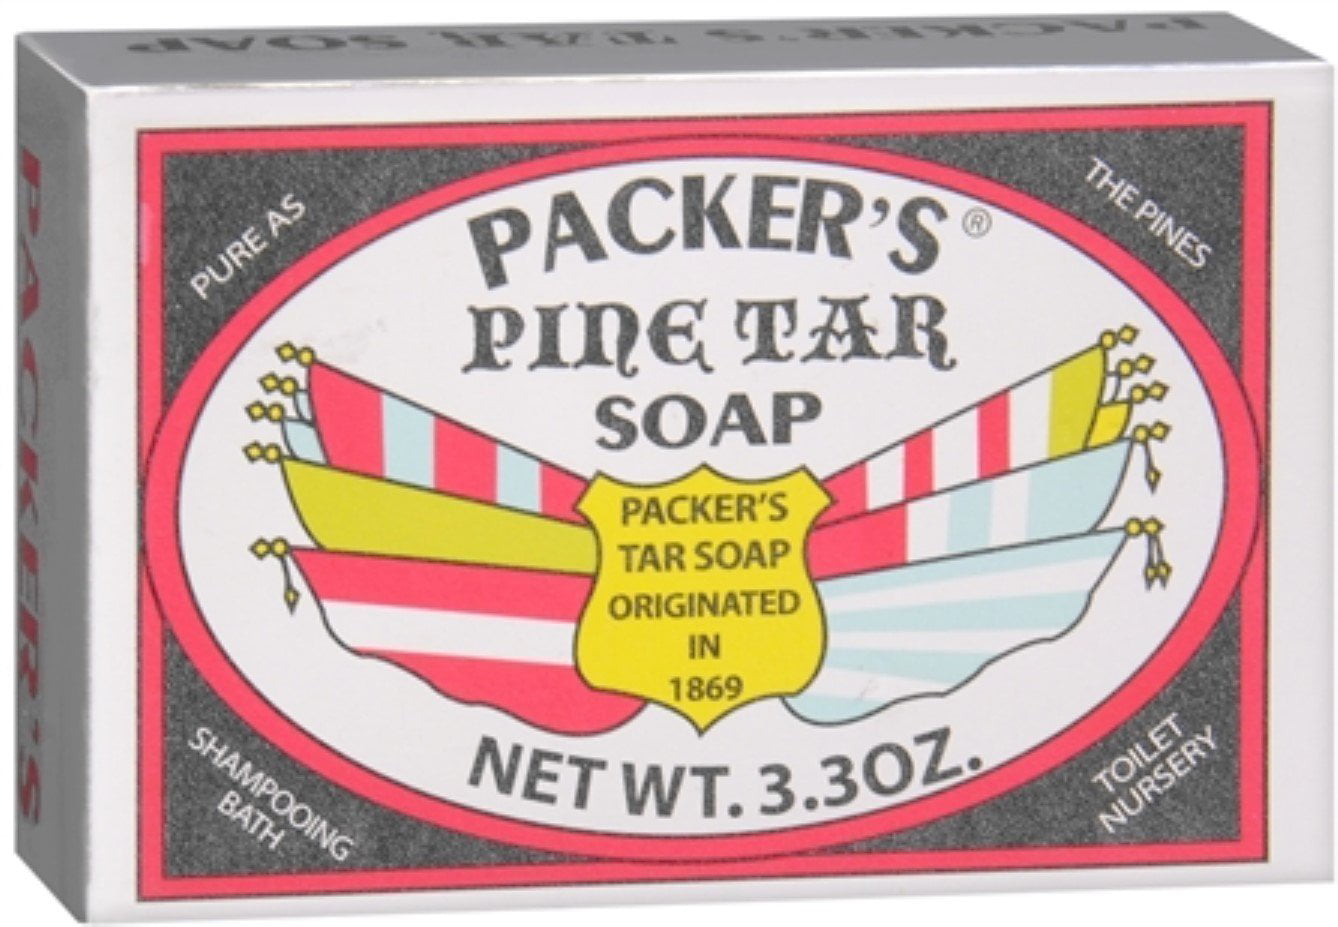 PACKER'S Pine Tar Soap 3.30 oz - Walmart.com